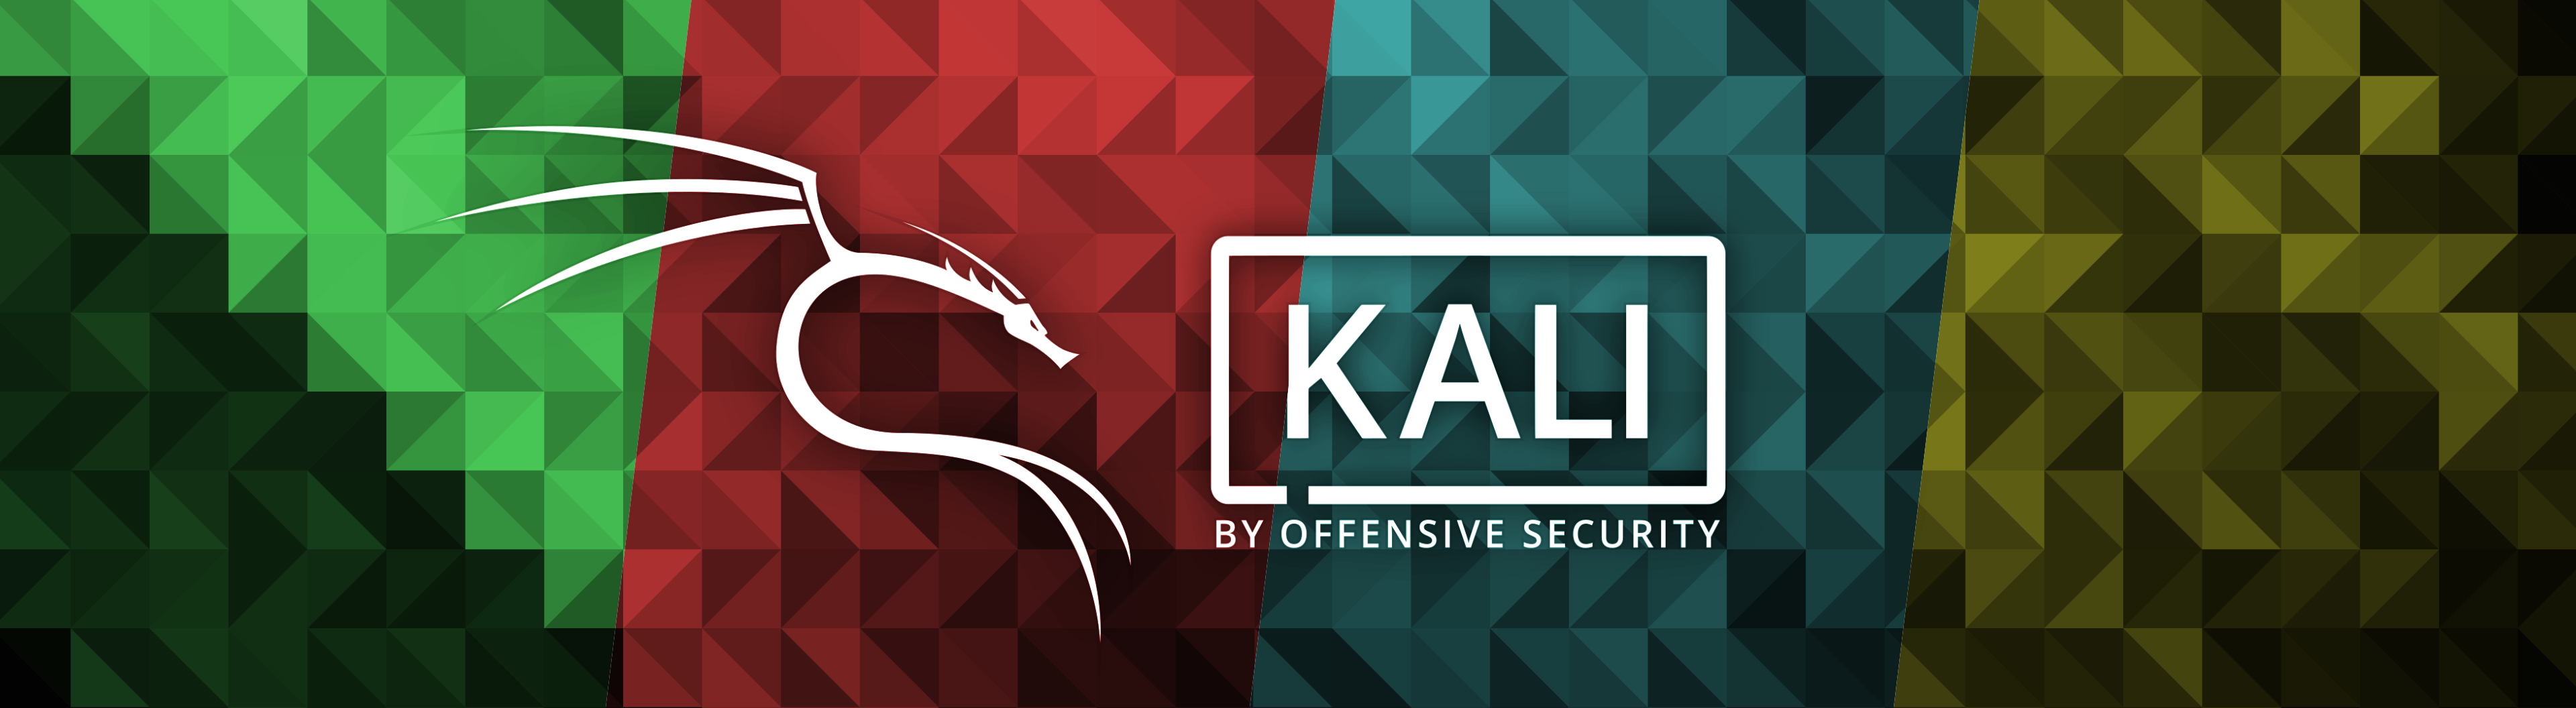 GitHub Wallpaper For Kali: Recolored Kali Linux Wallpaper